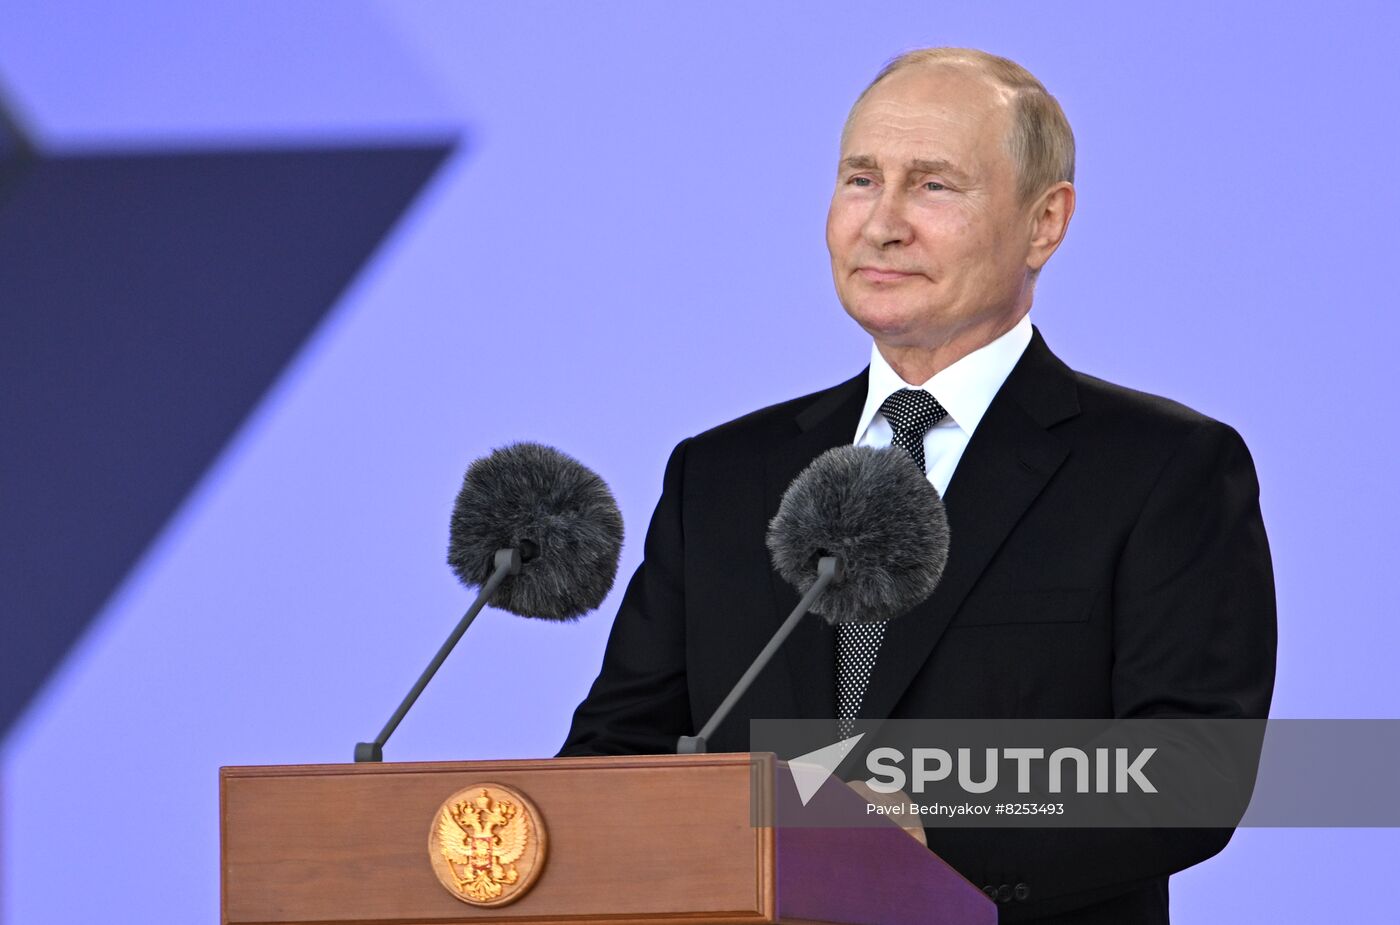 Russia Putin Army Forum Opening